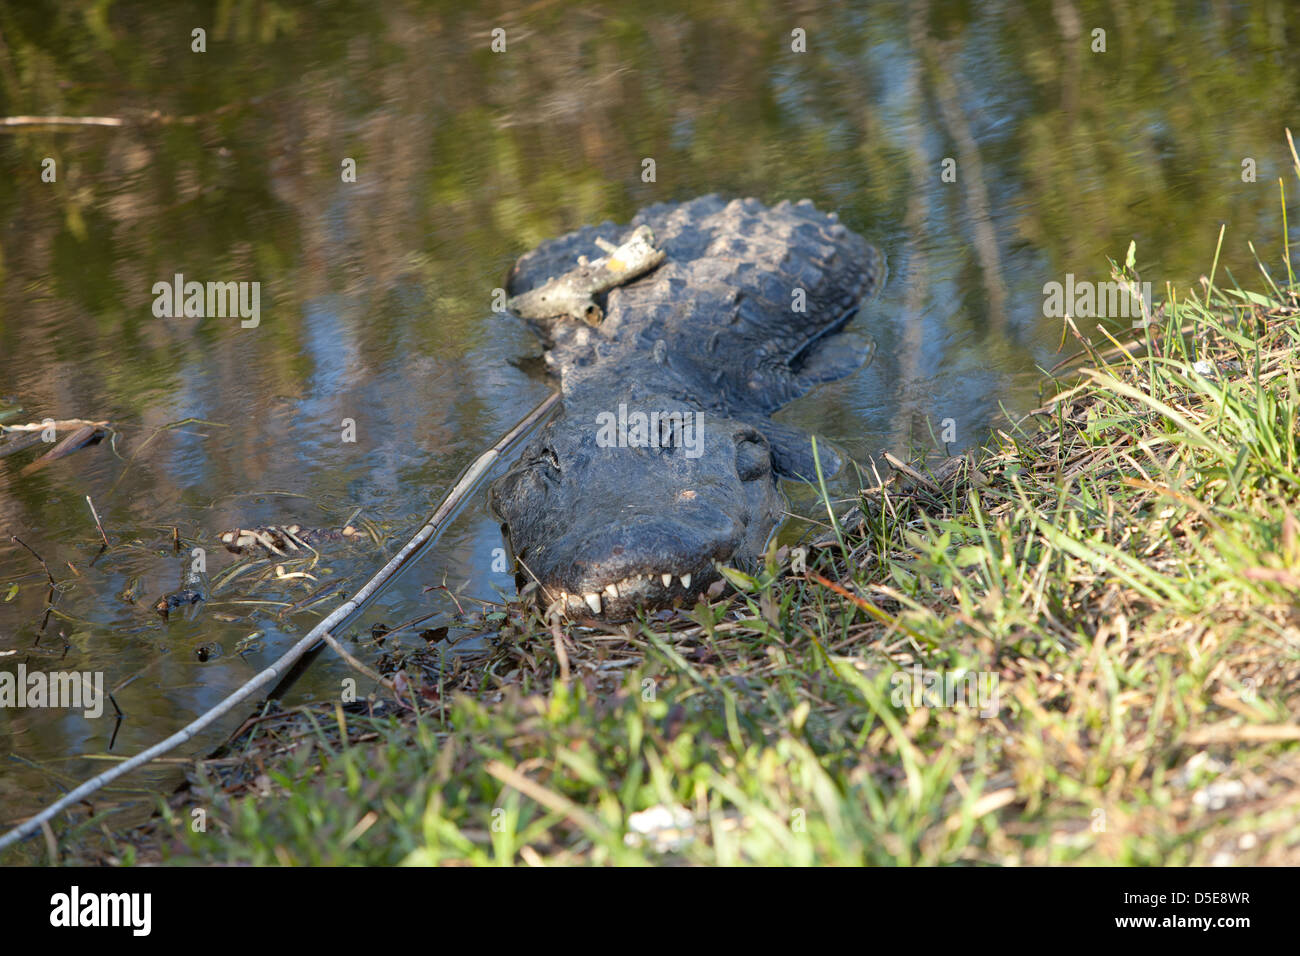 Alligator Florida wildlife Stock Photo